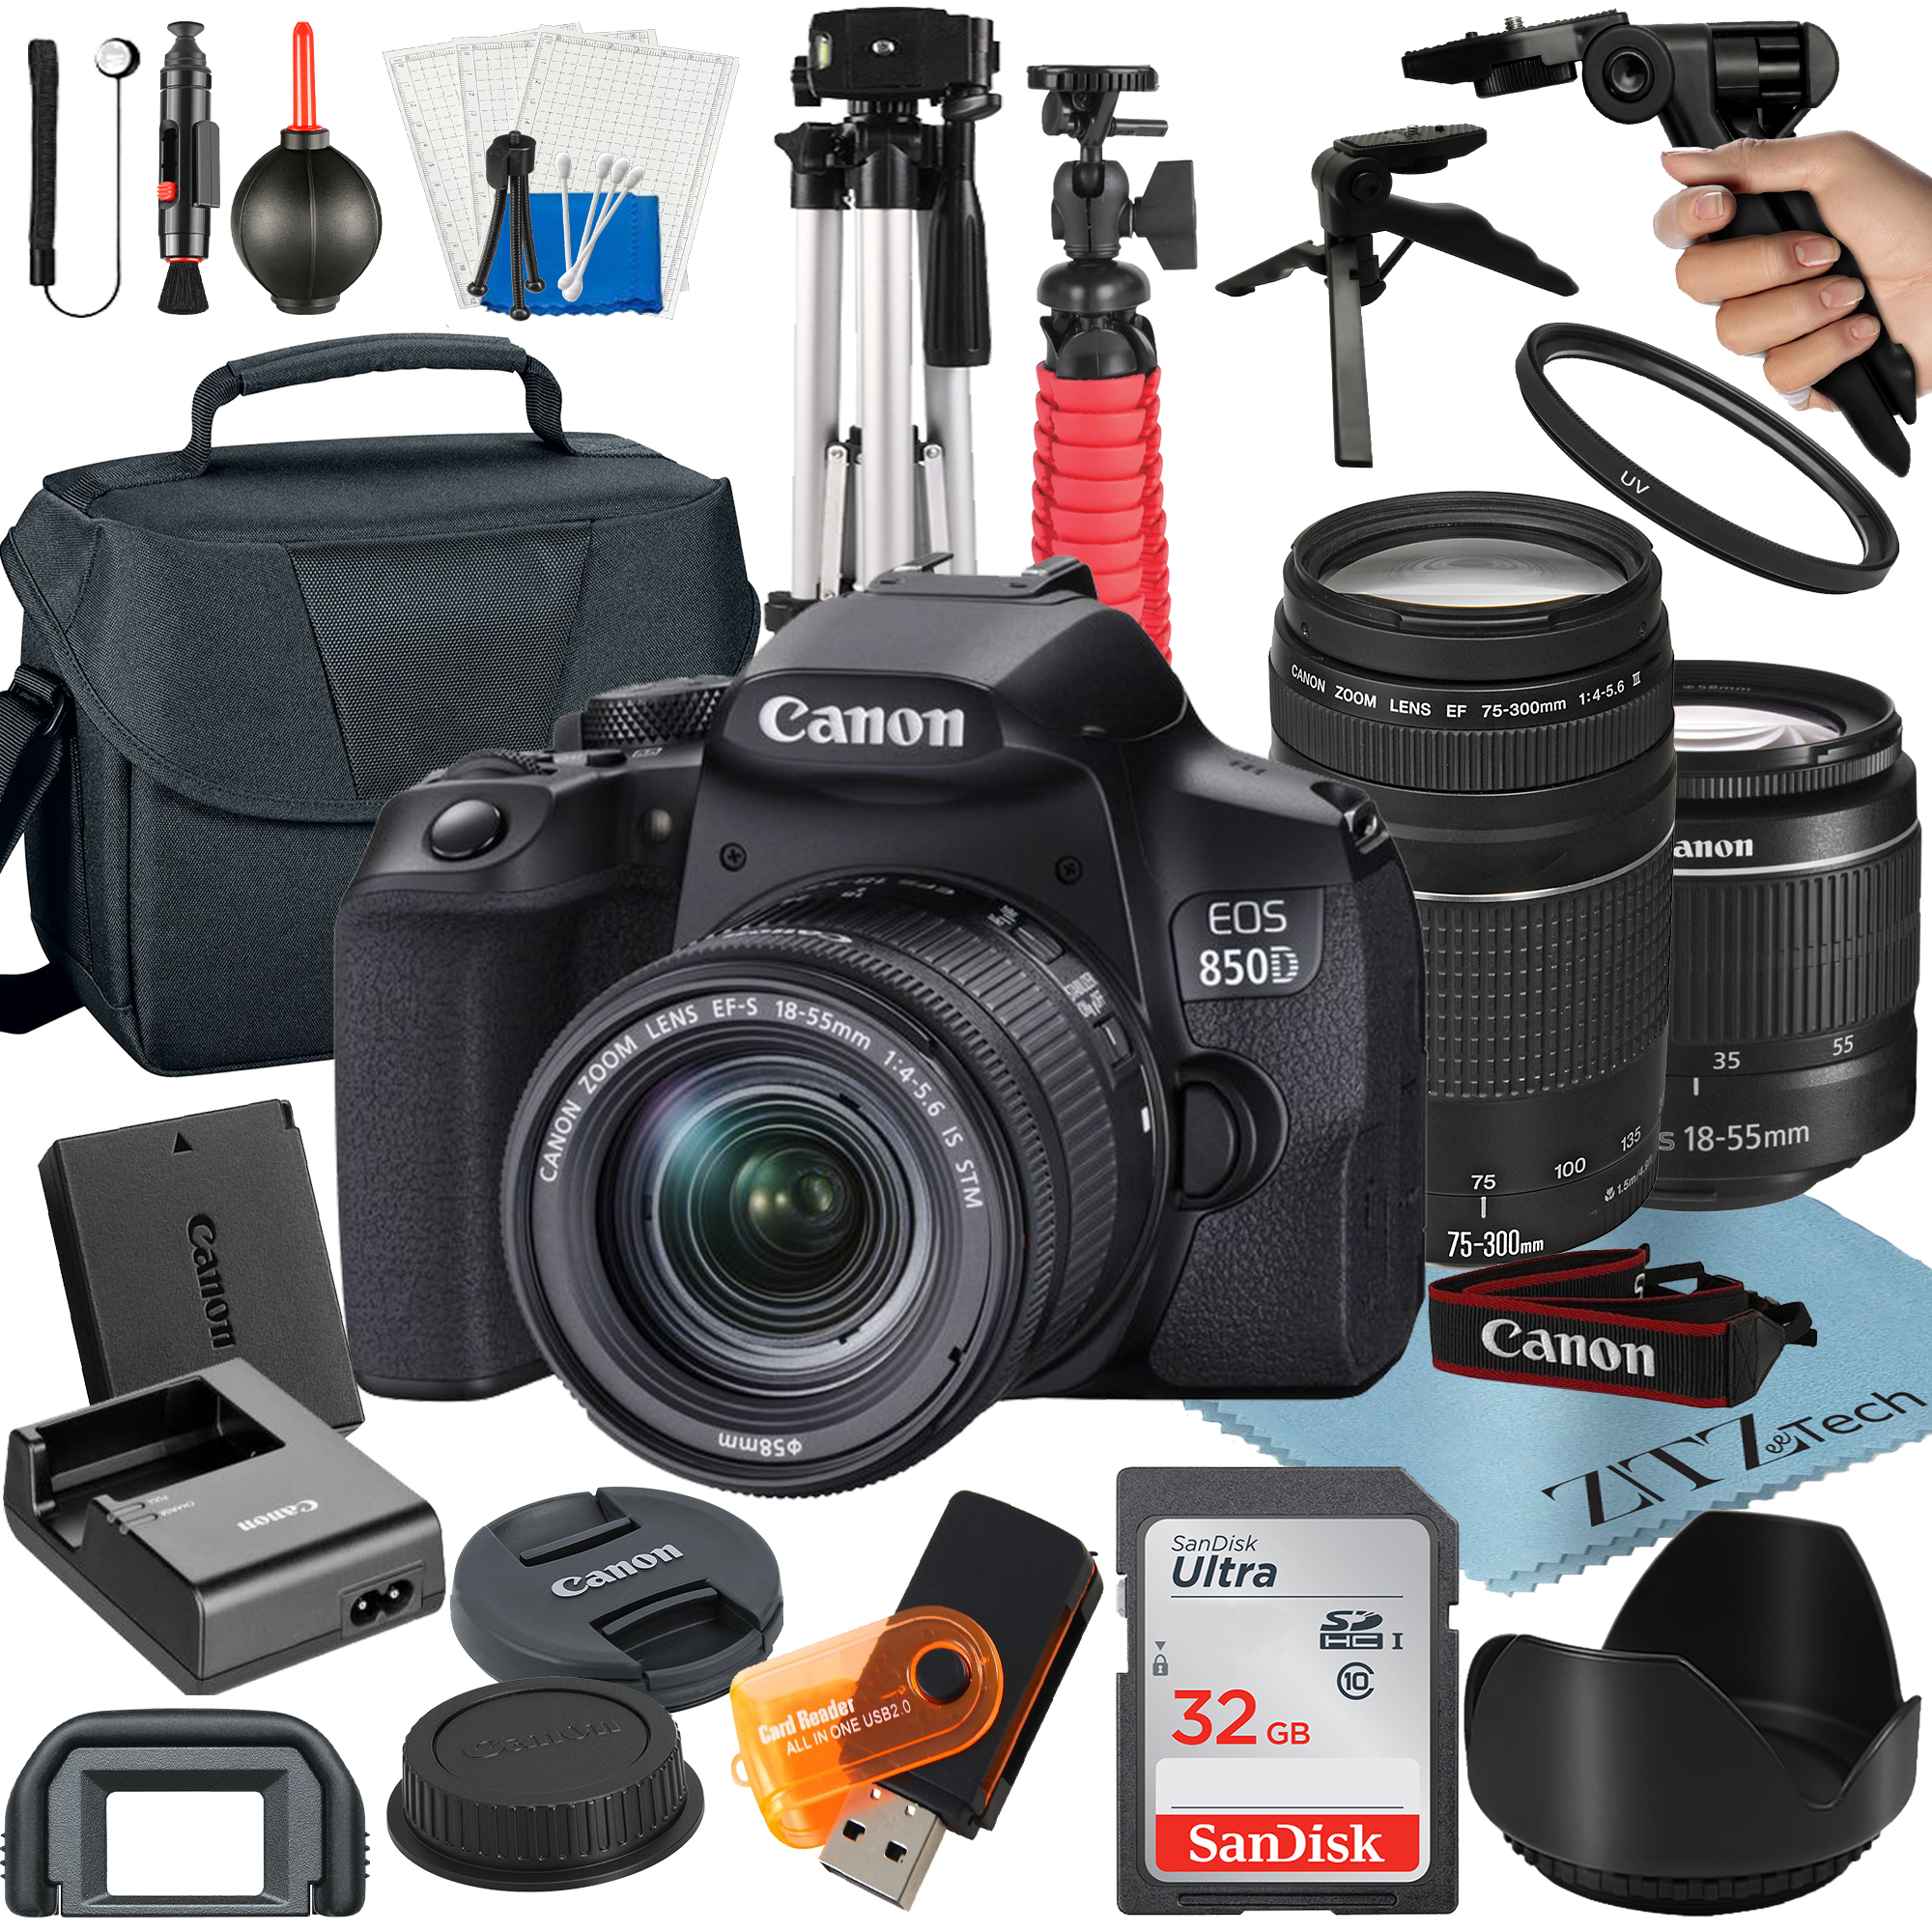 Canon EOS 850D / Rebel T8i DSLR Camera Bundle with 18-55mm + 75-300mm Lens + 32GB SanDisk Card + Case + Tripod + ZeeTech Accessory